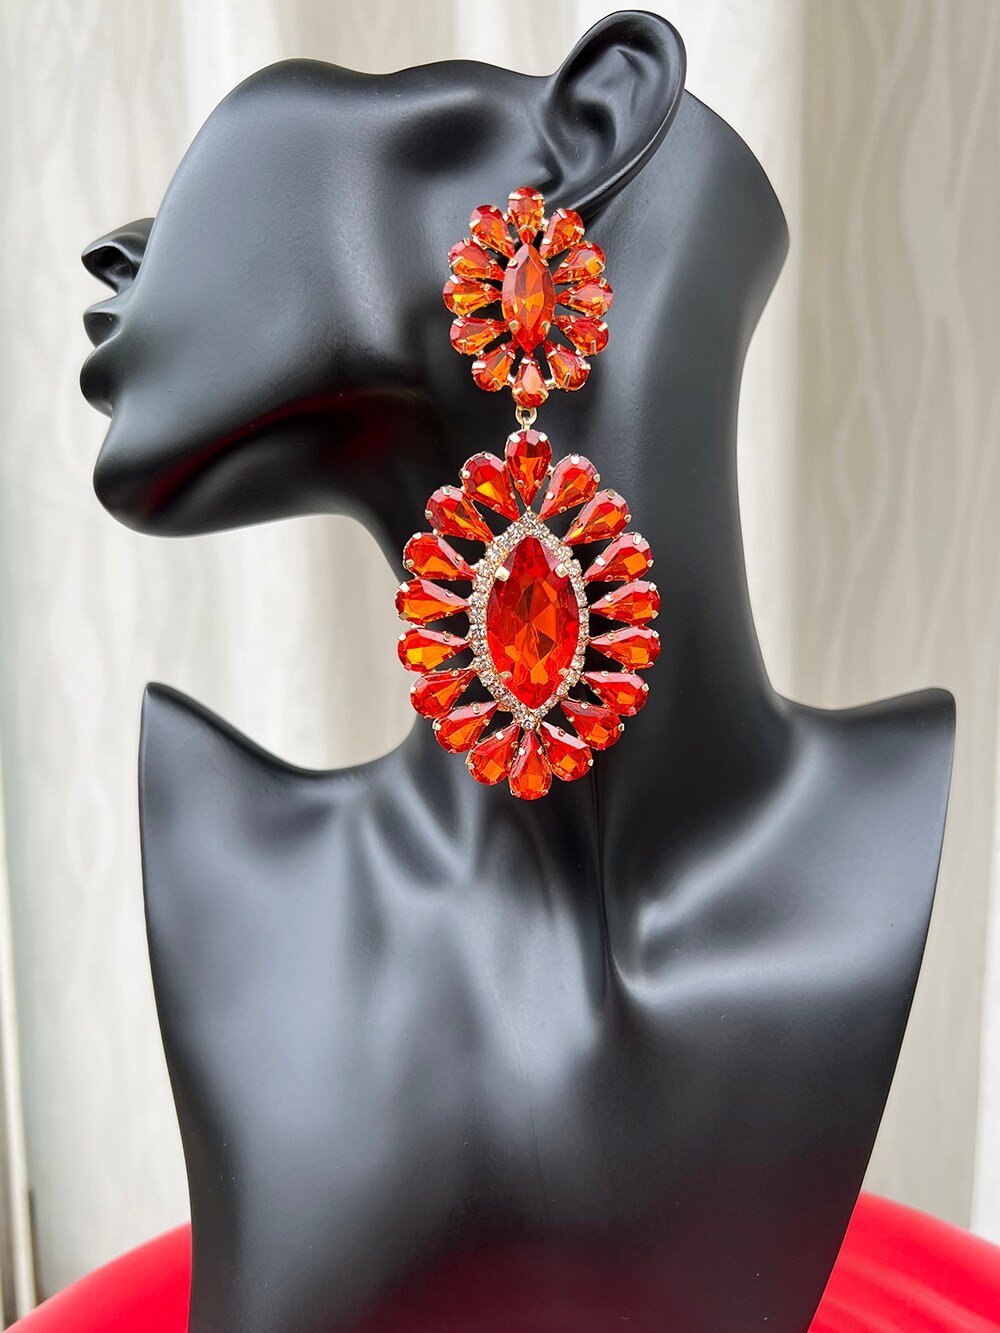 Gorgeous Rhinestone Geometric Earrings - Lively & Luxury